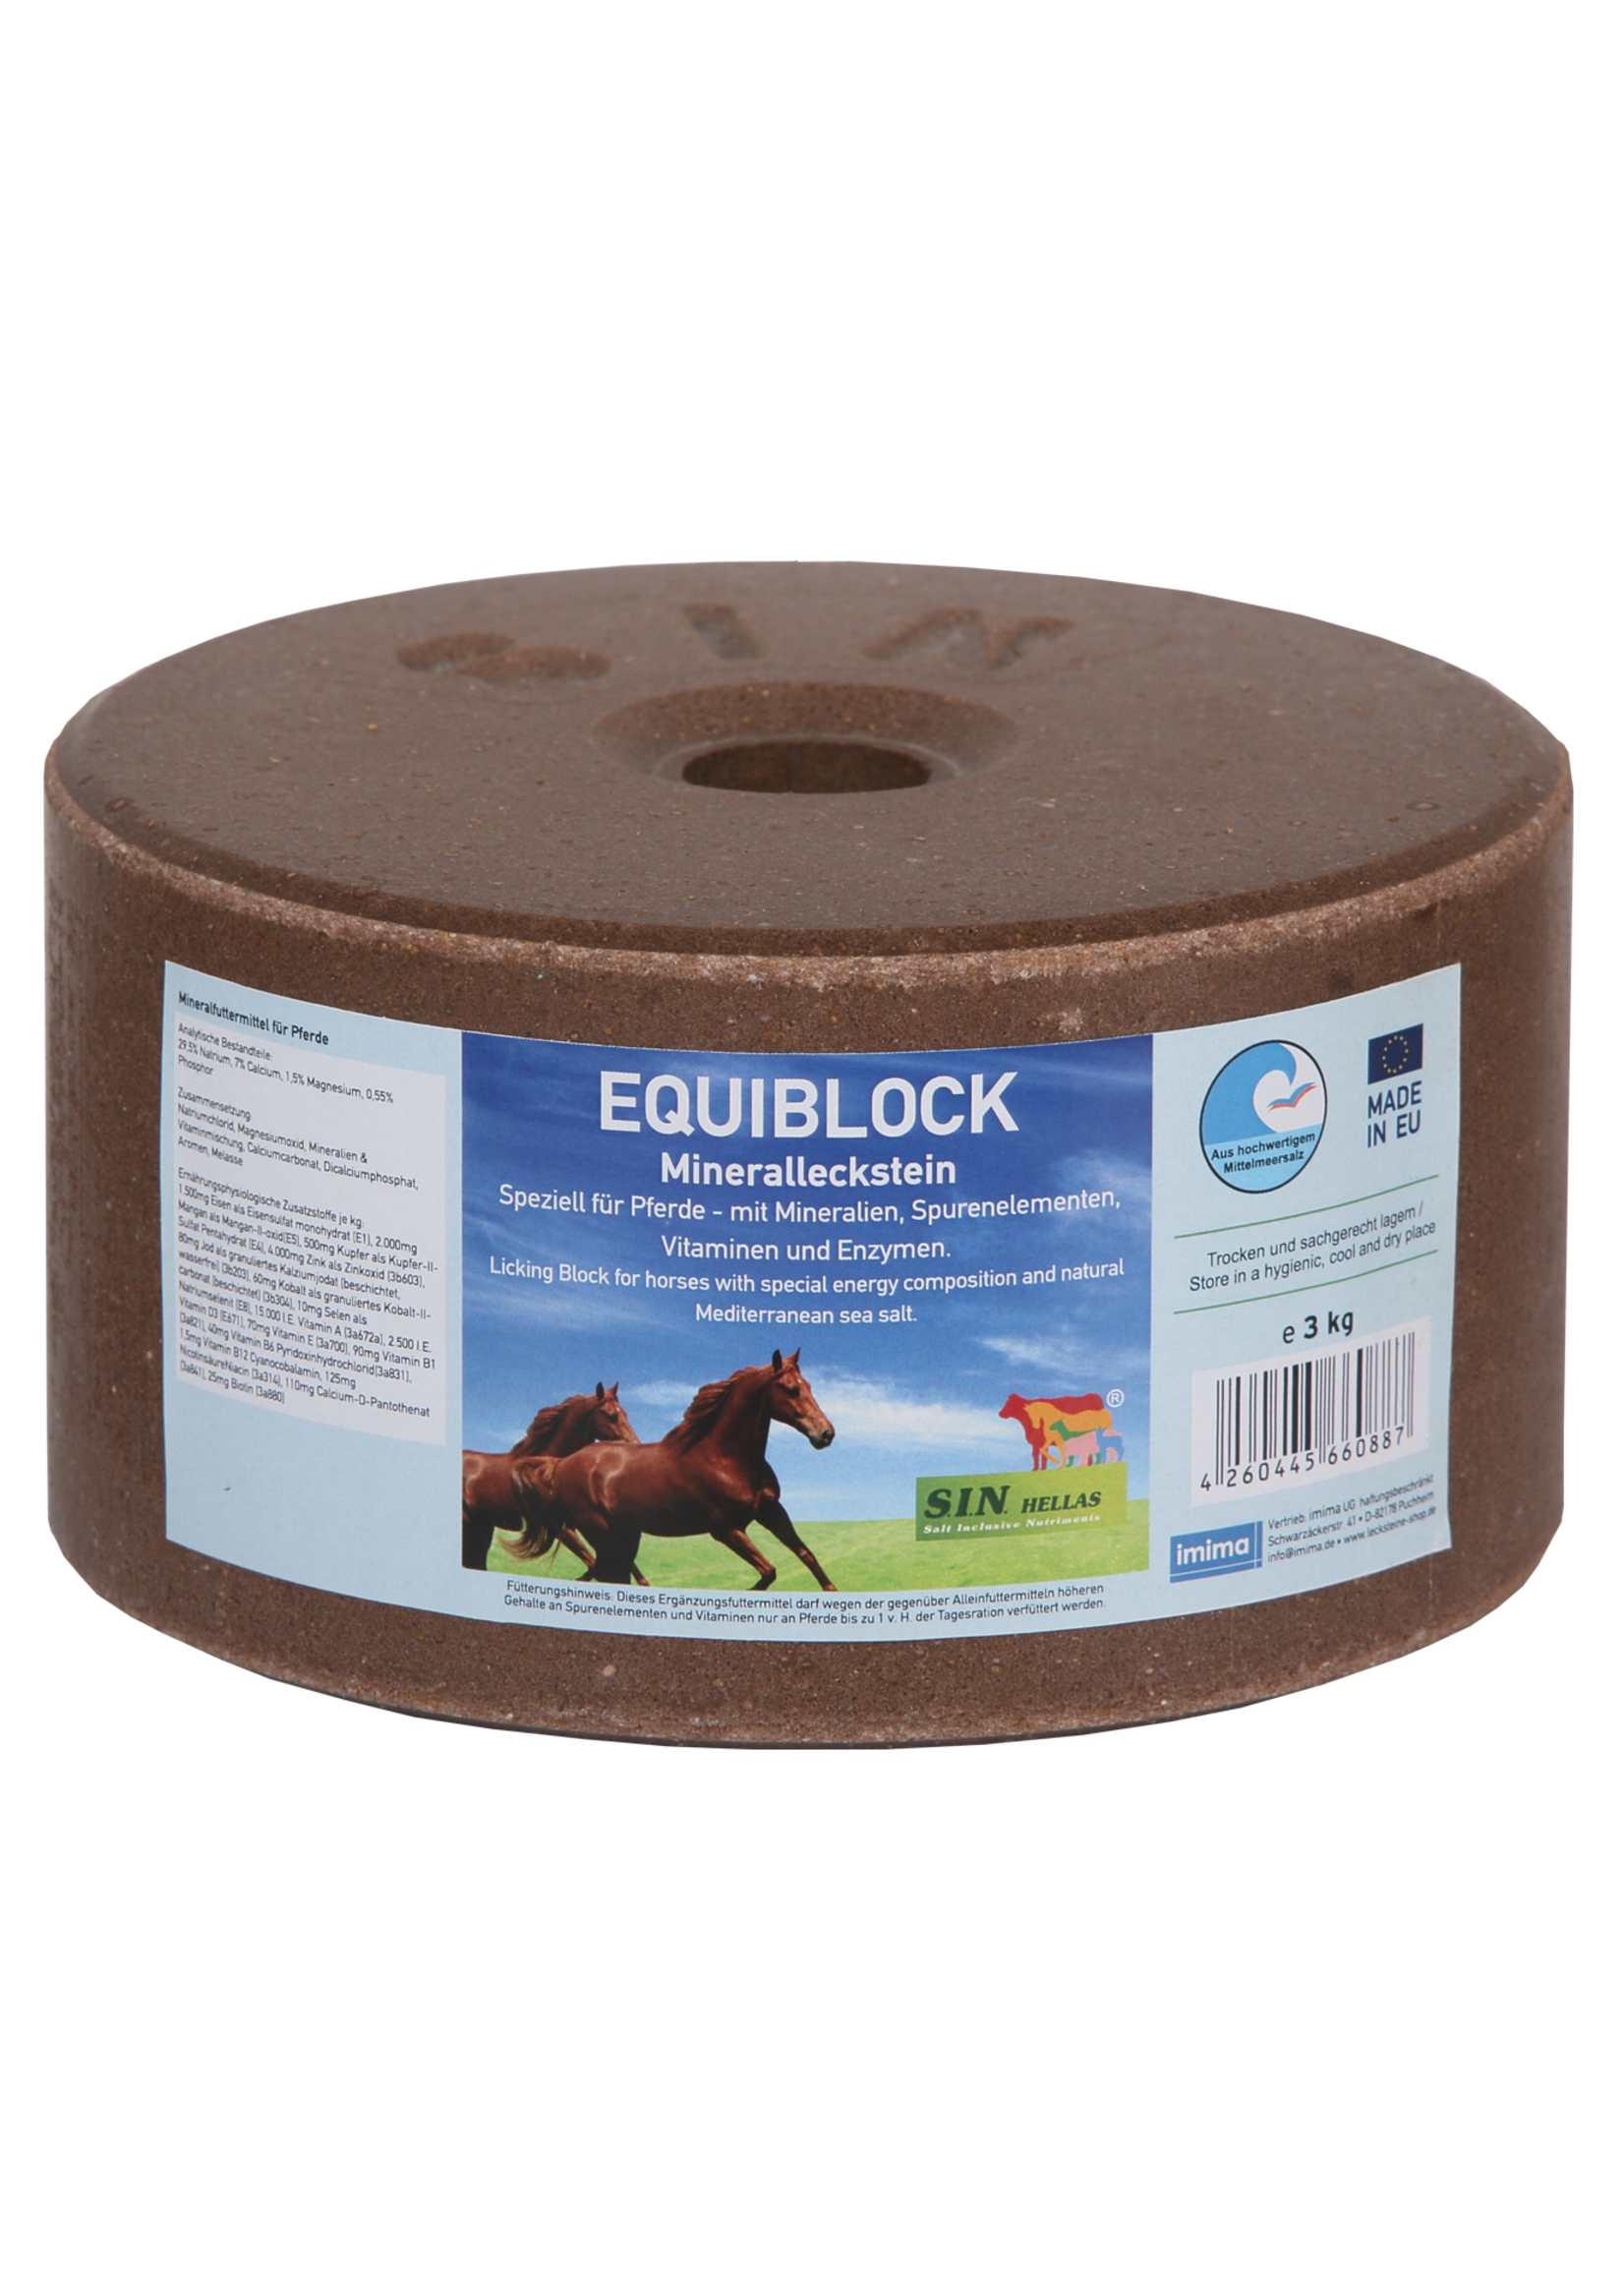 Liksteen paard Equiblock Equiblock